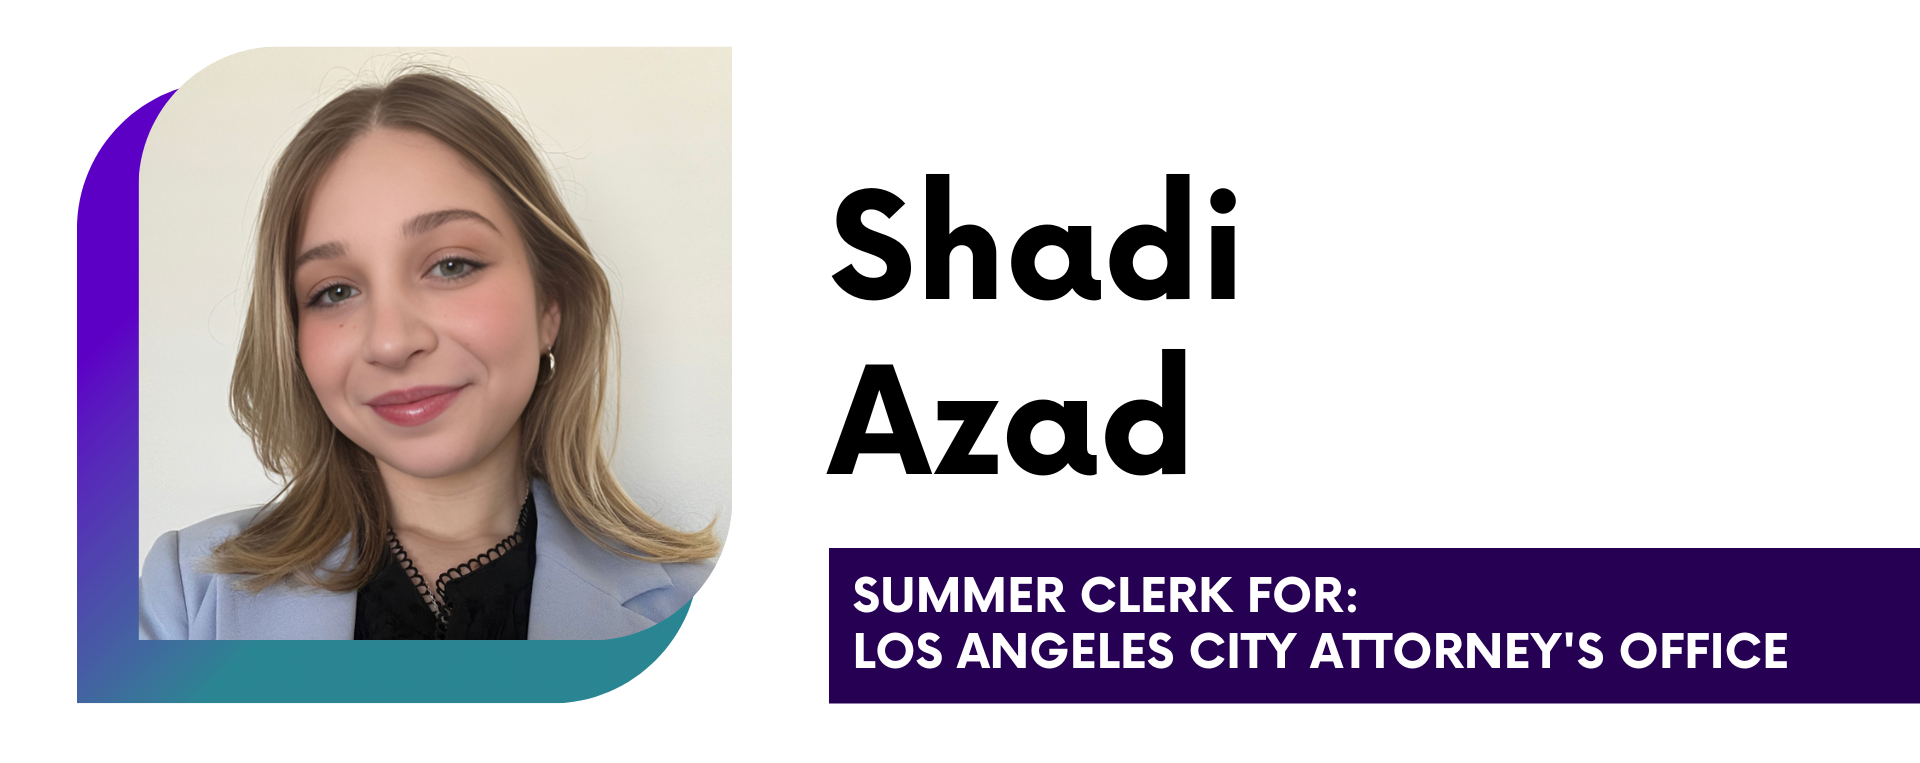 Shadi Azad Summer Clerk for Los Angeles City Attorney's Office